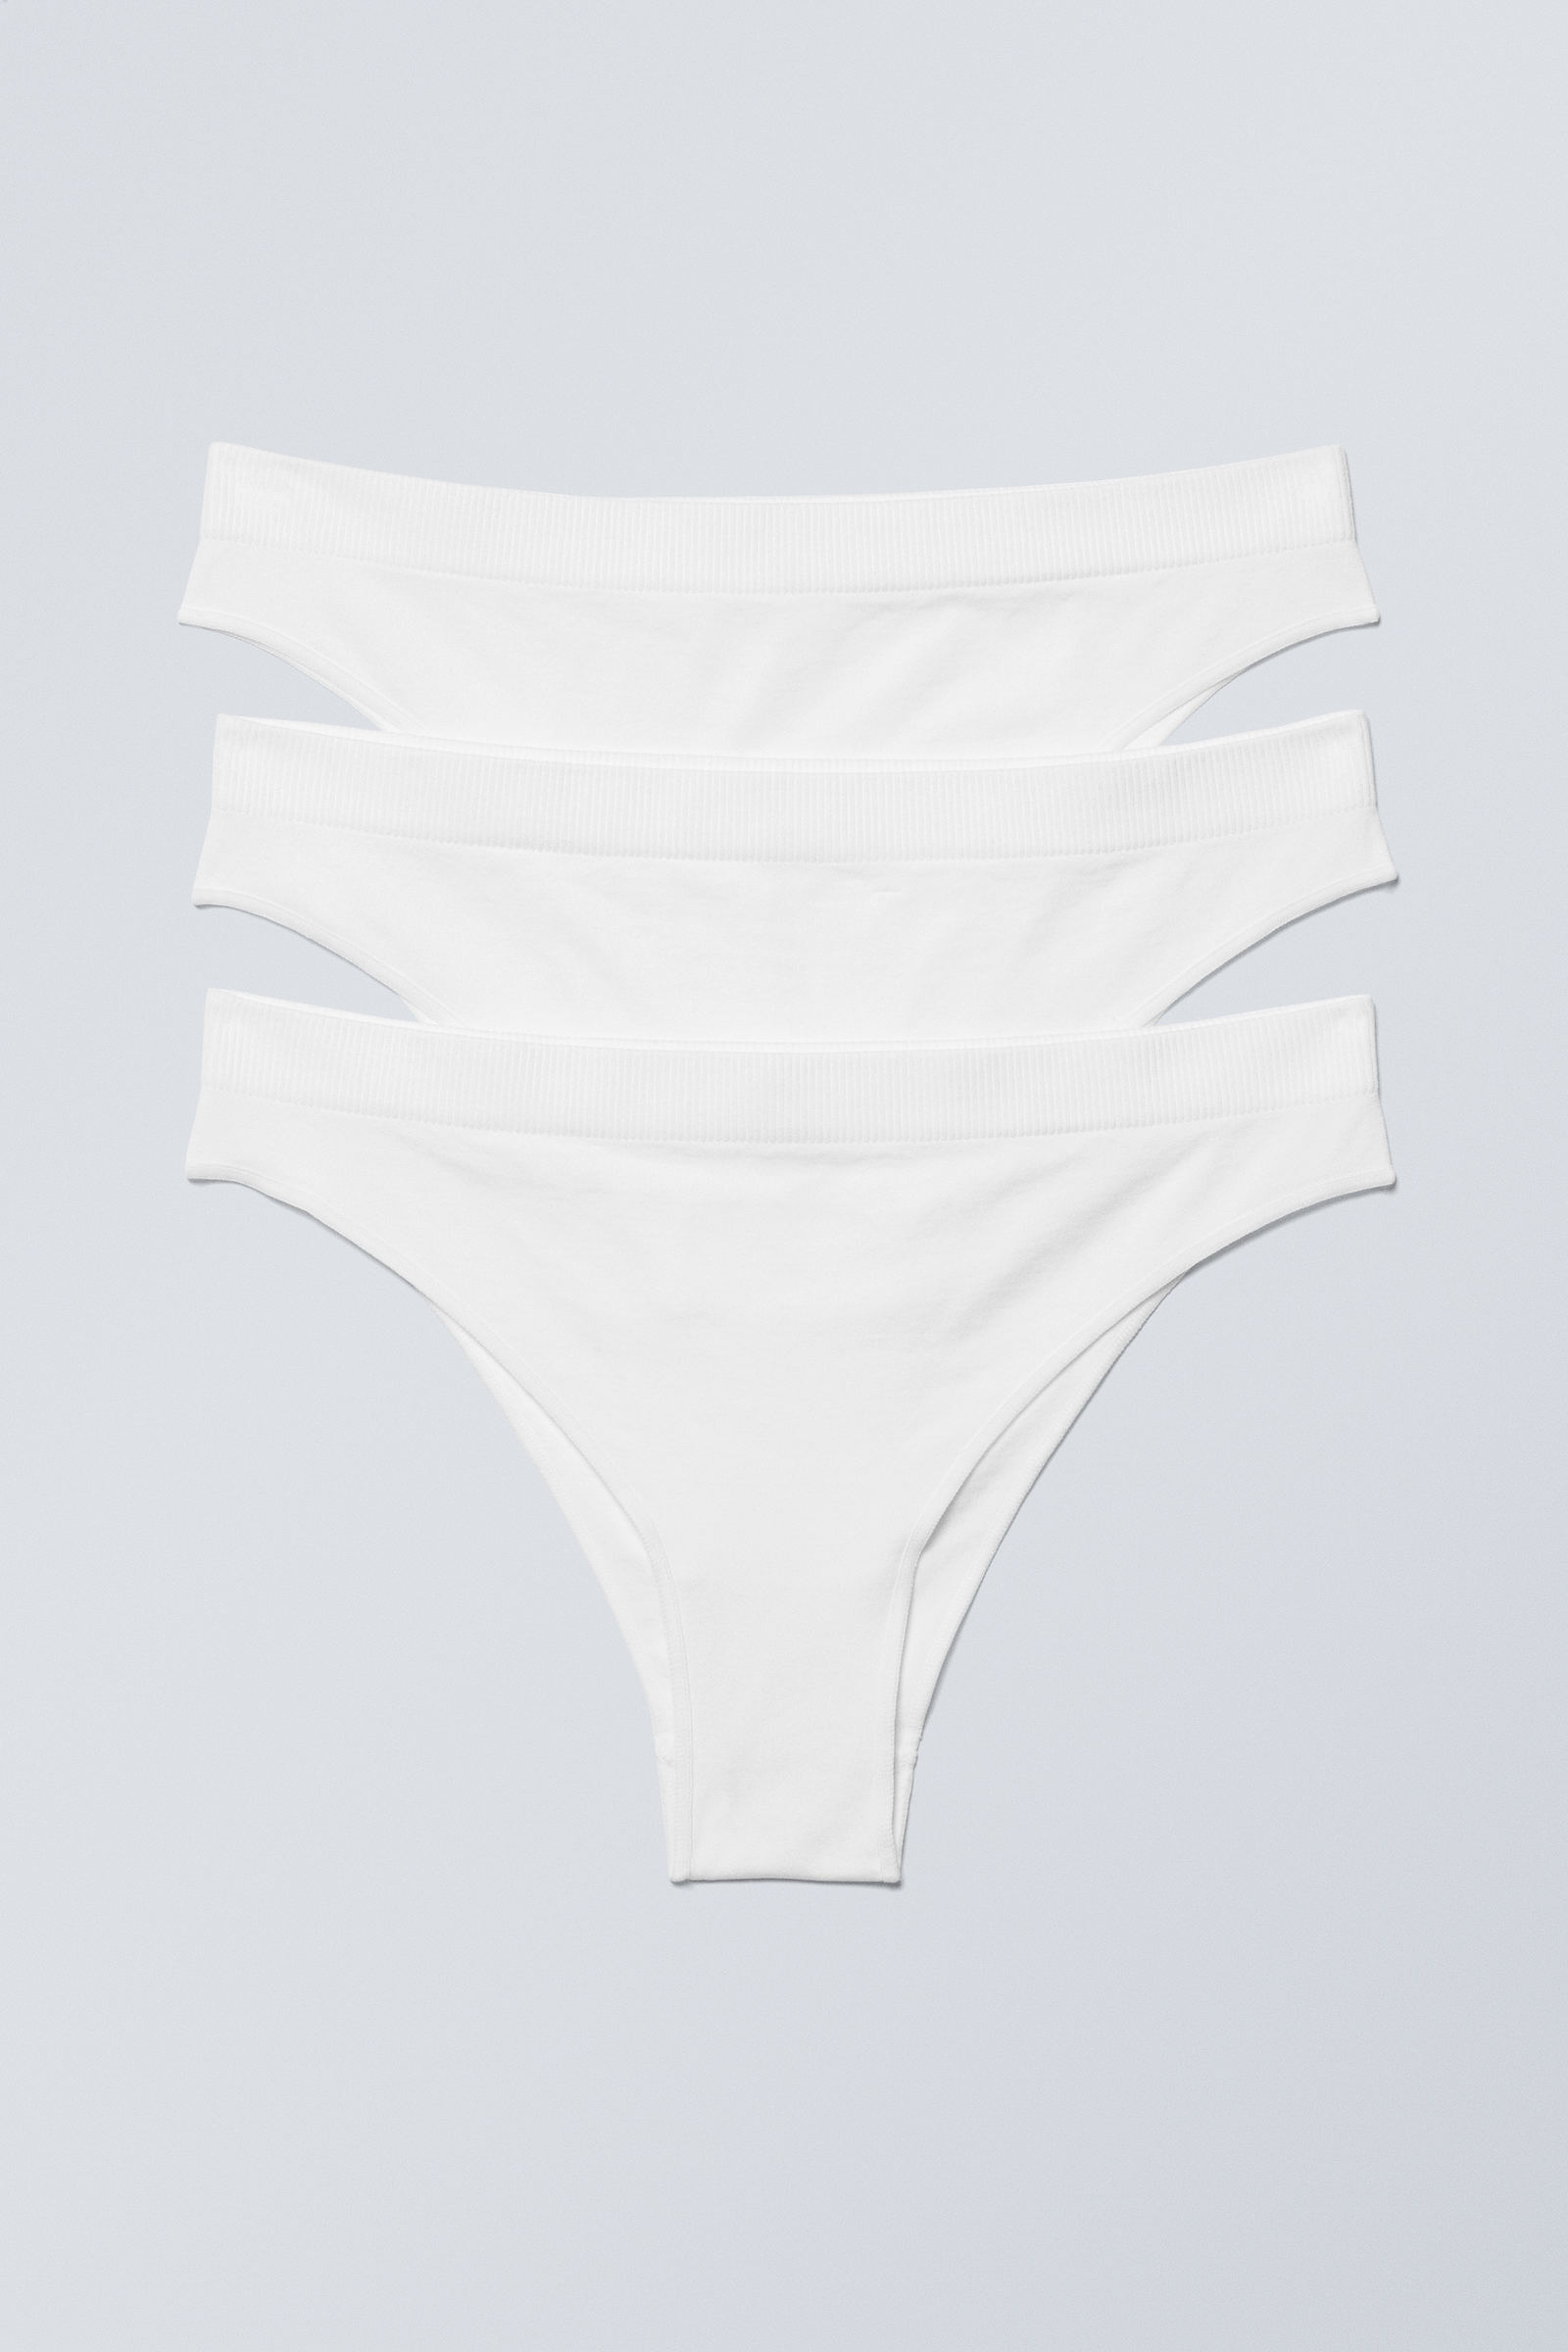 eczipvz Cotton Underwear for Women Seamless Thongs For Women Underwear Lady  Low Waist Thong Lace Tangas Solid Color White,L 